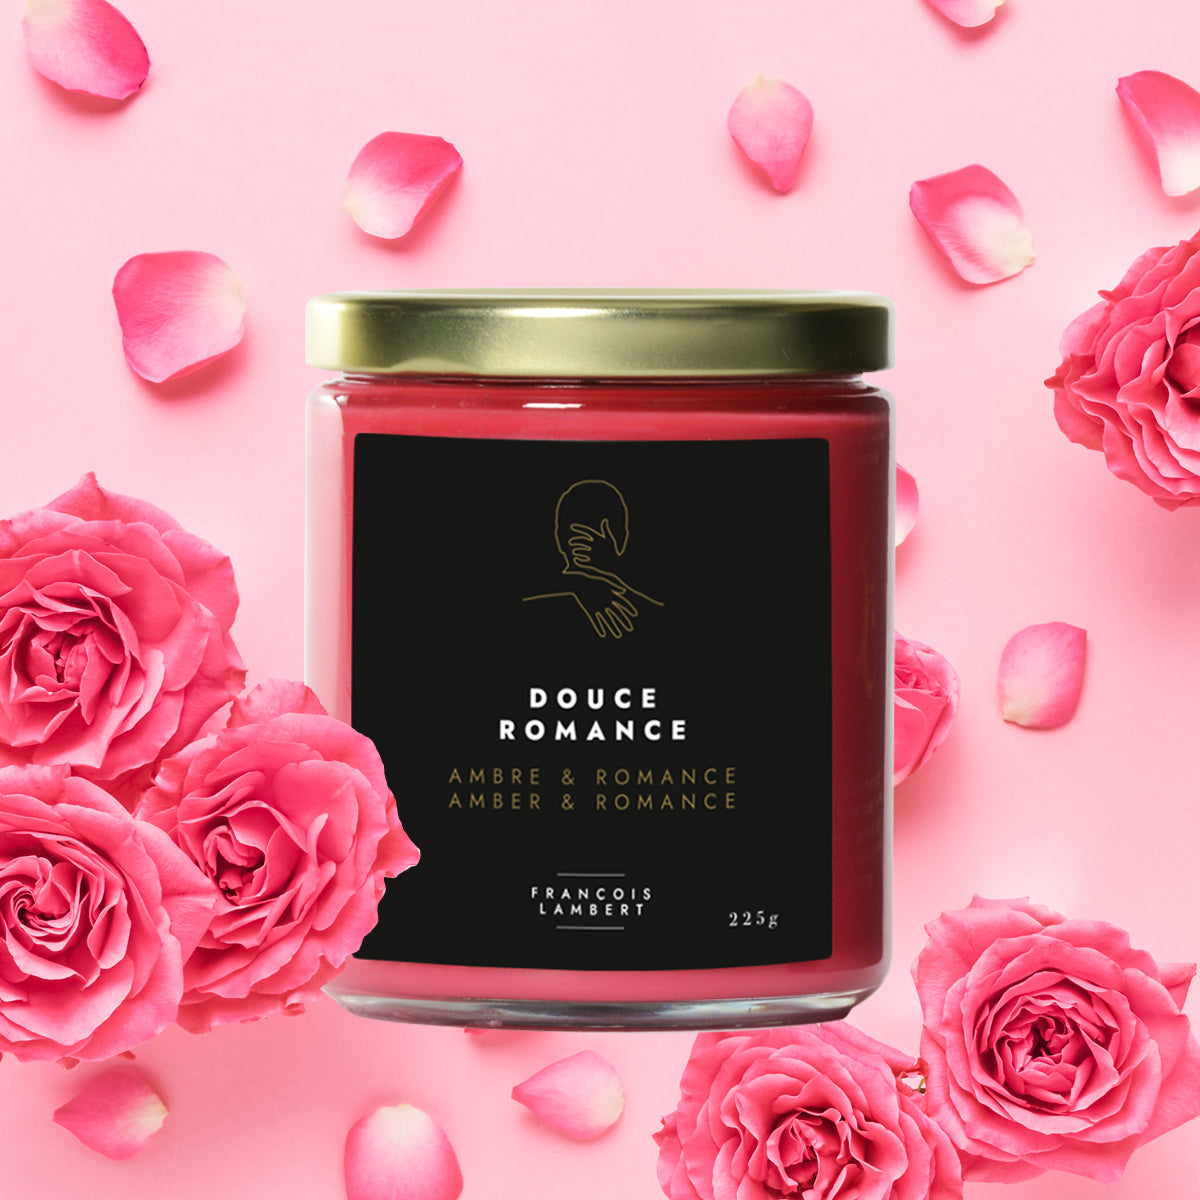 Sweet romance - Amber & Romance soy candle